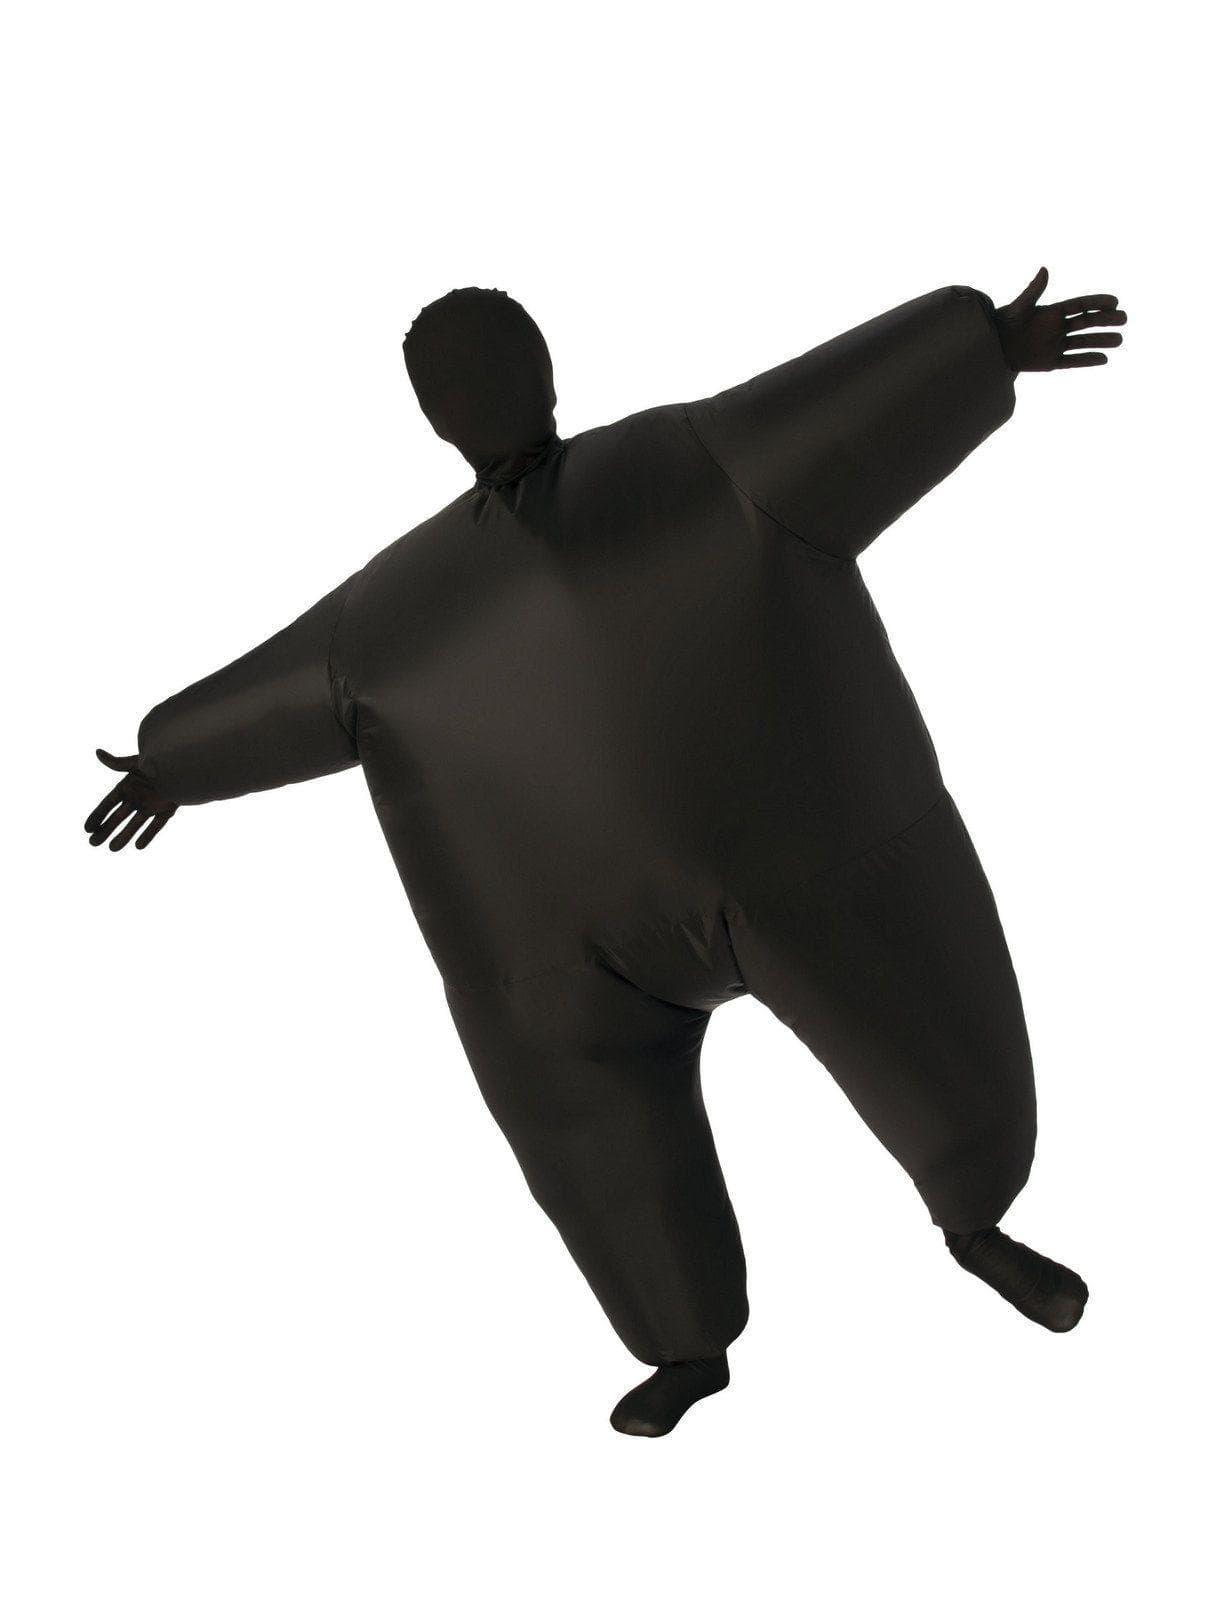 Kids' Black Inflatable Jumpsuit - costumes.com